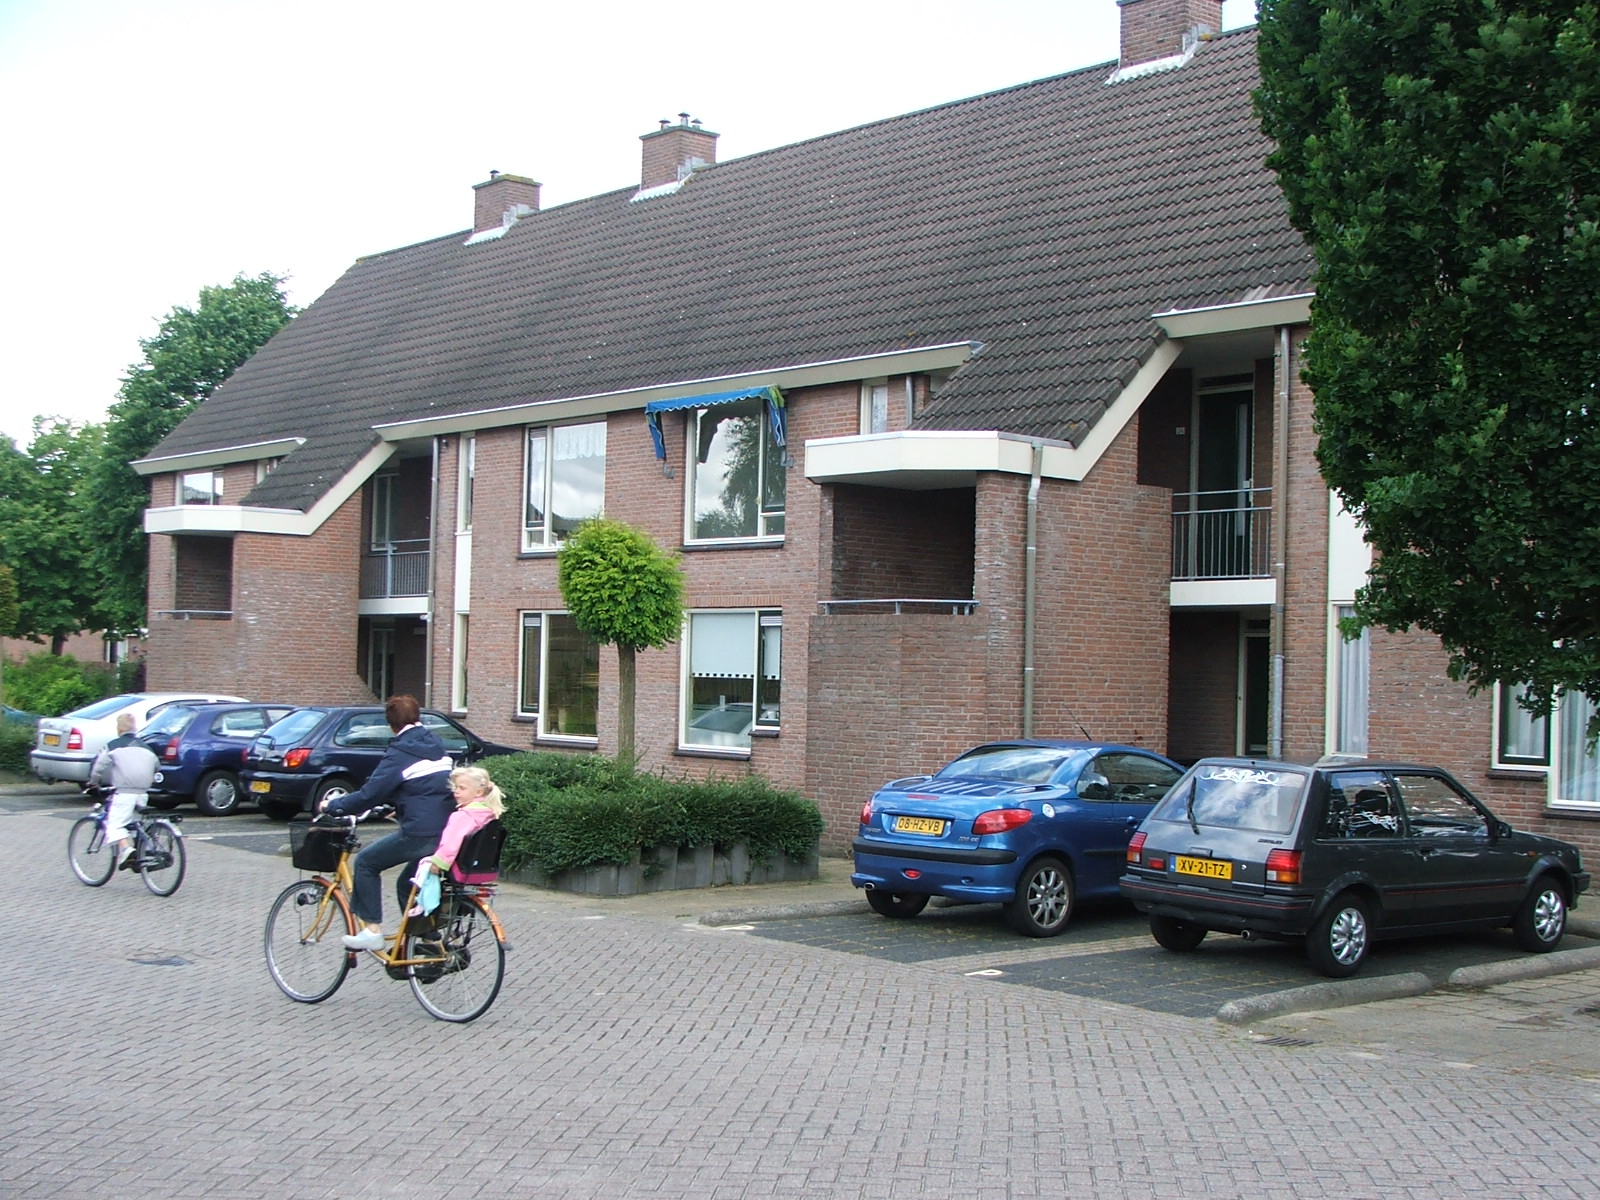 Acaciastraat 8, 2461 DK Ter Aar, Nederland